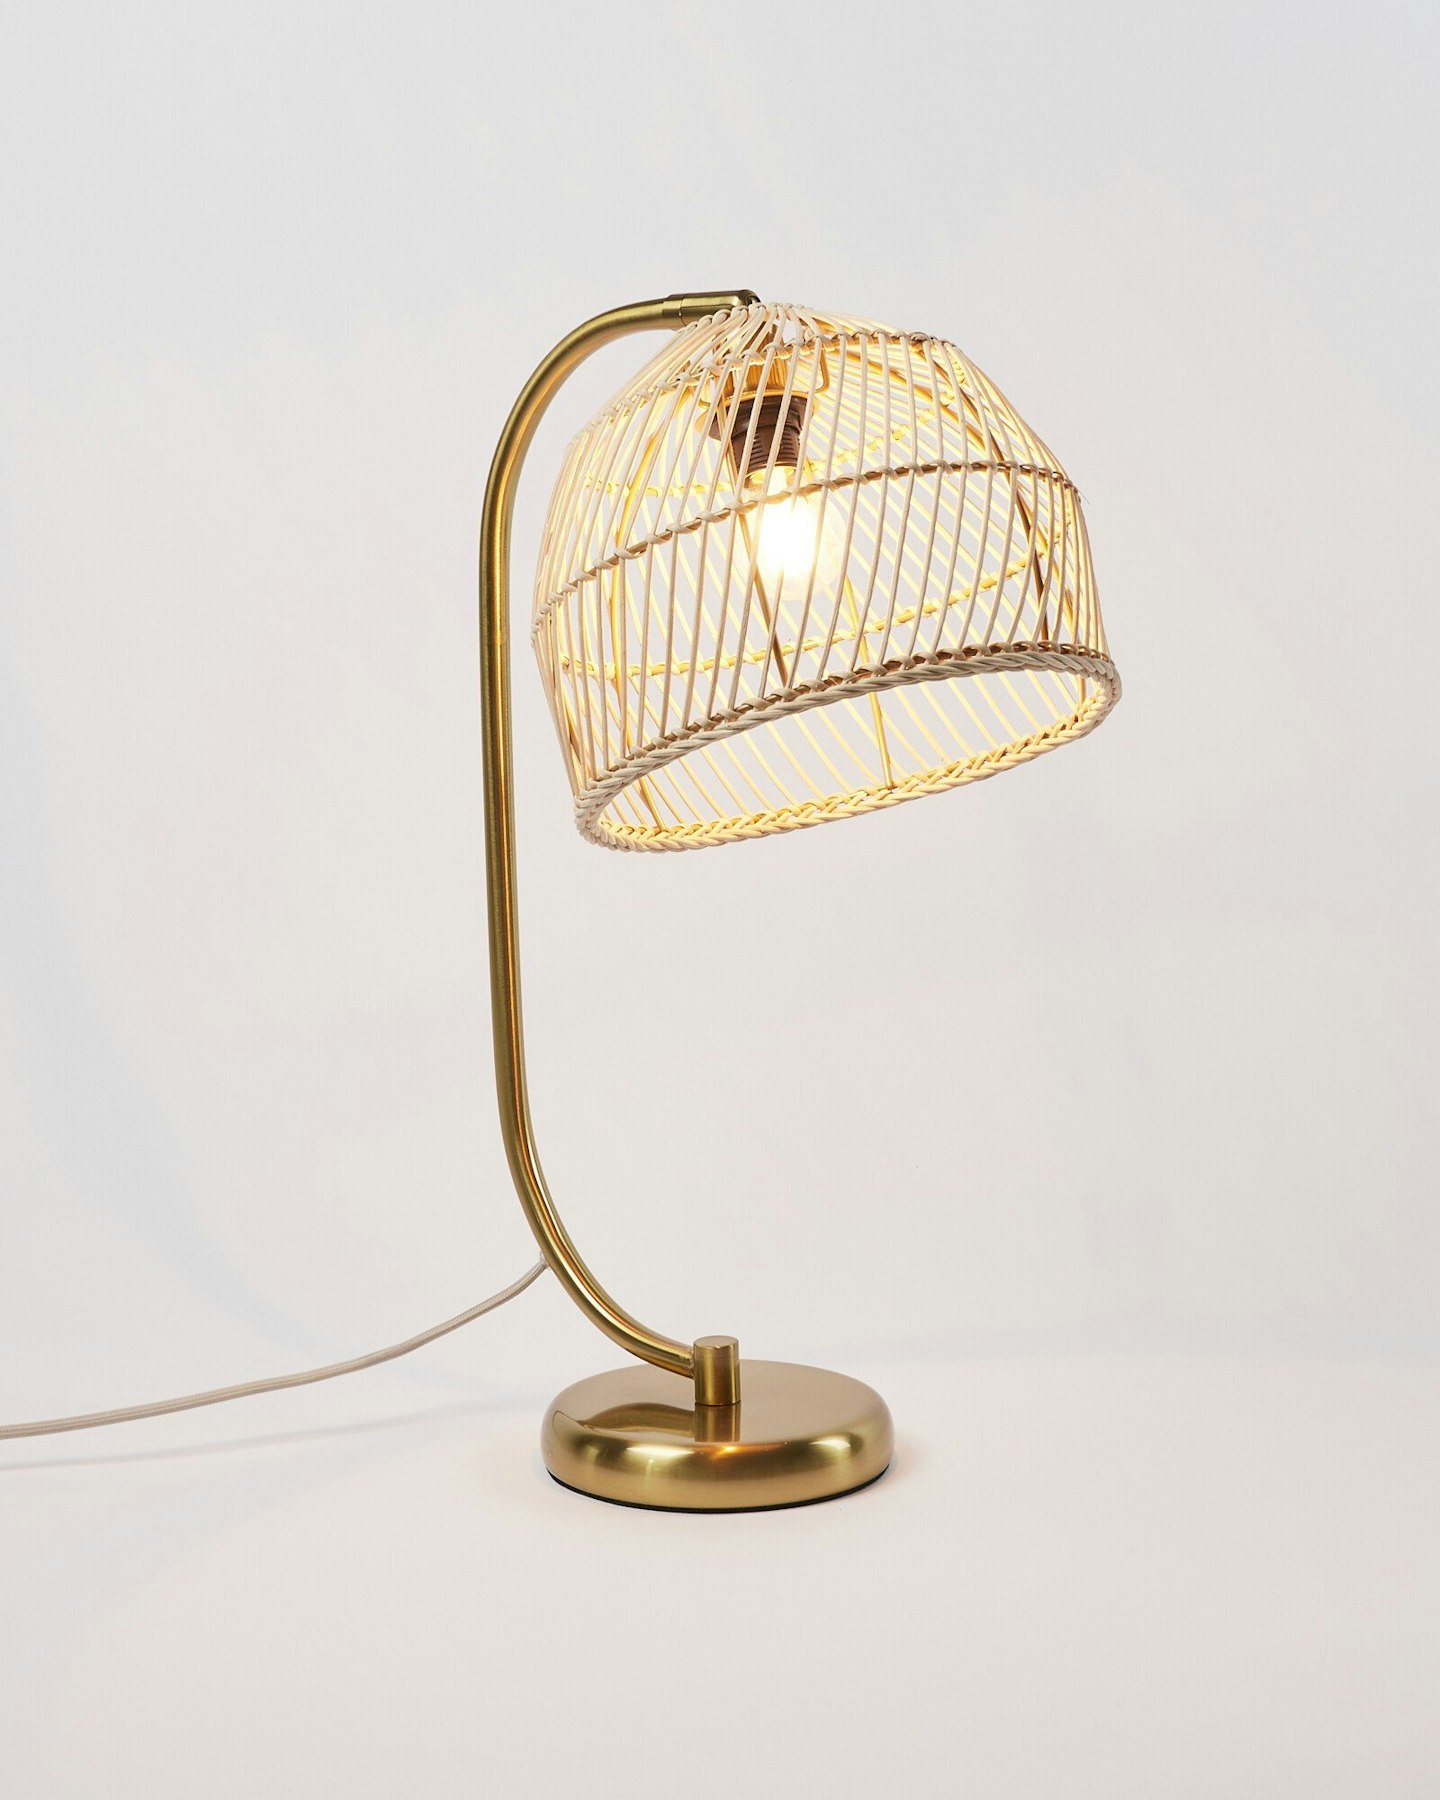 Oliver Bonas, Tadek Natural Rattan Desk & Table Lamp, WAS £89.50 NOW £62